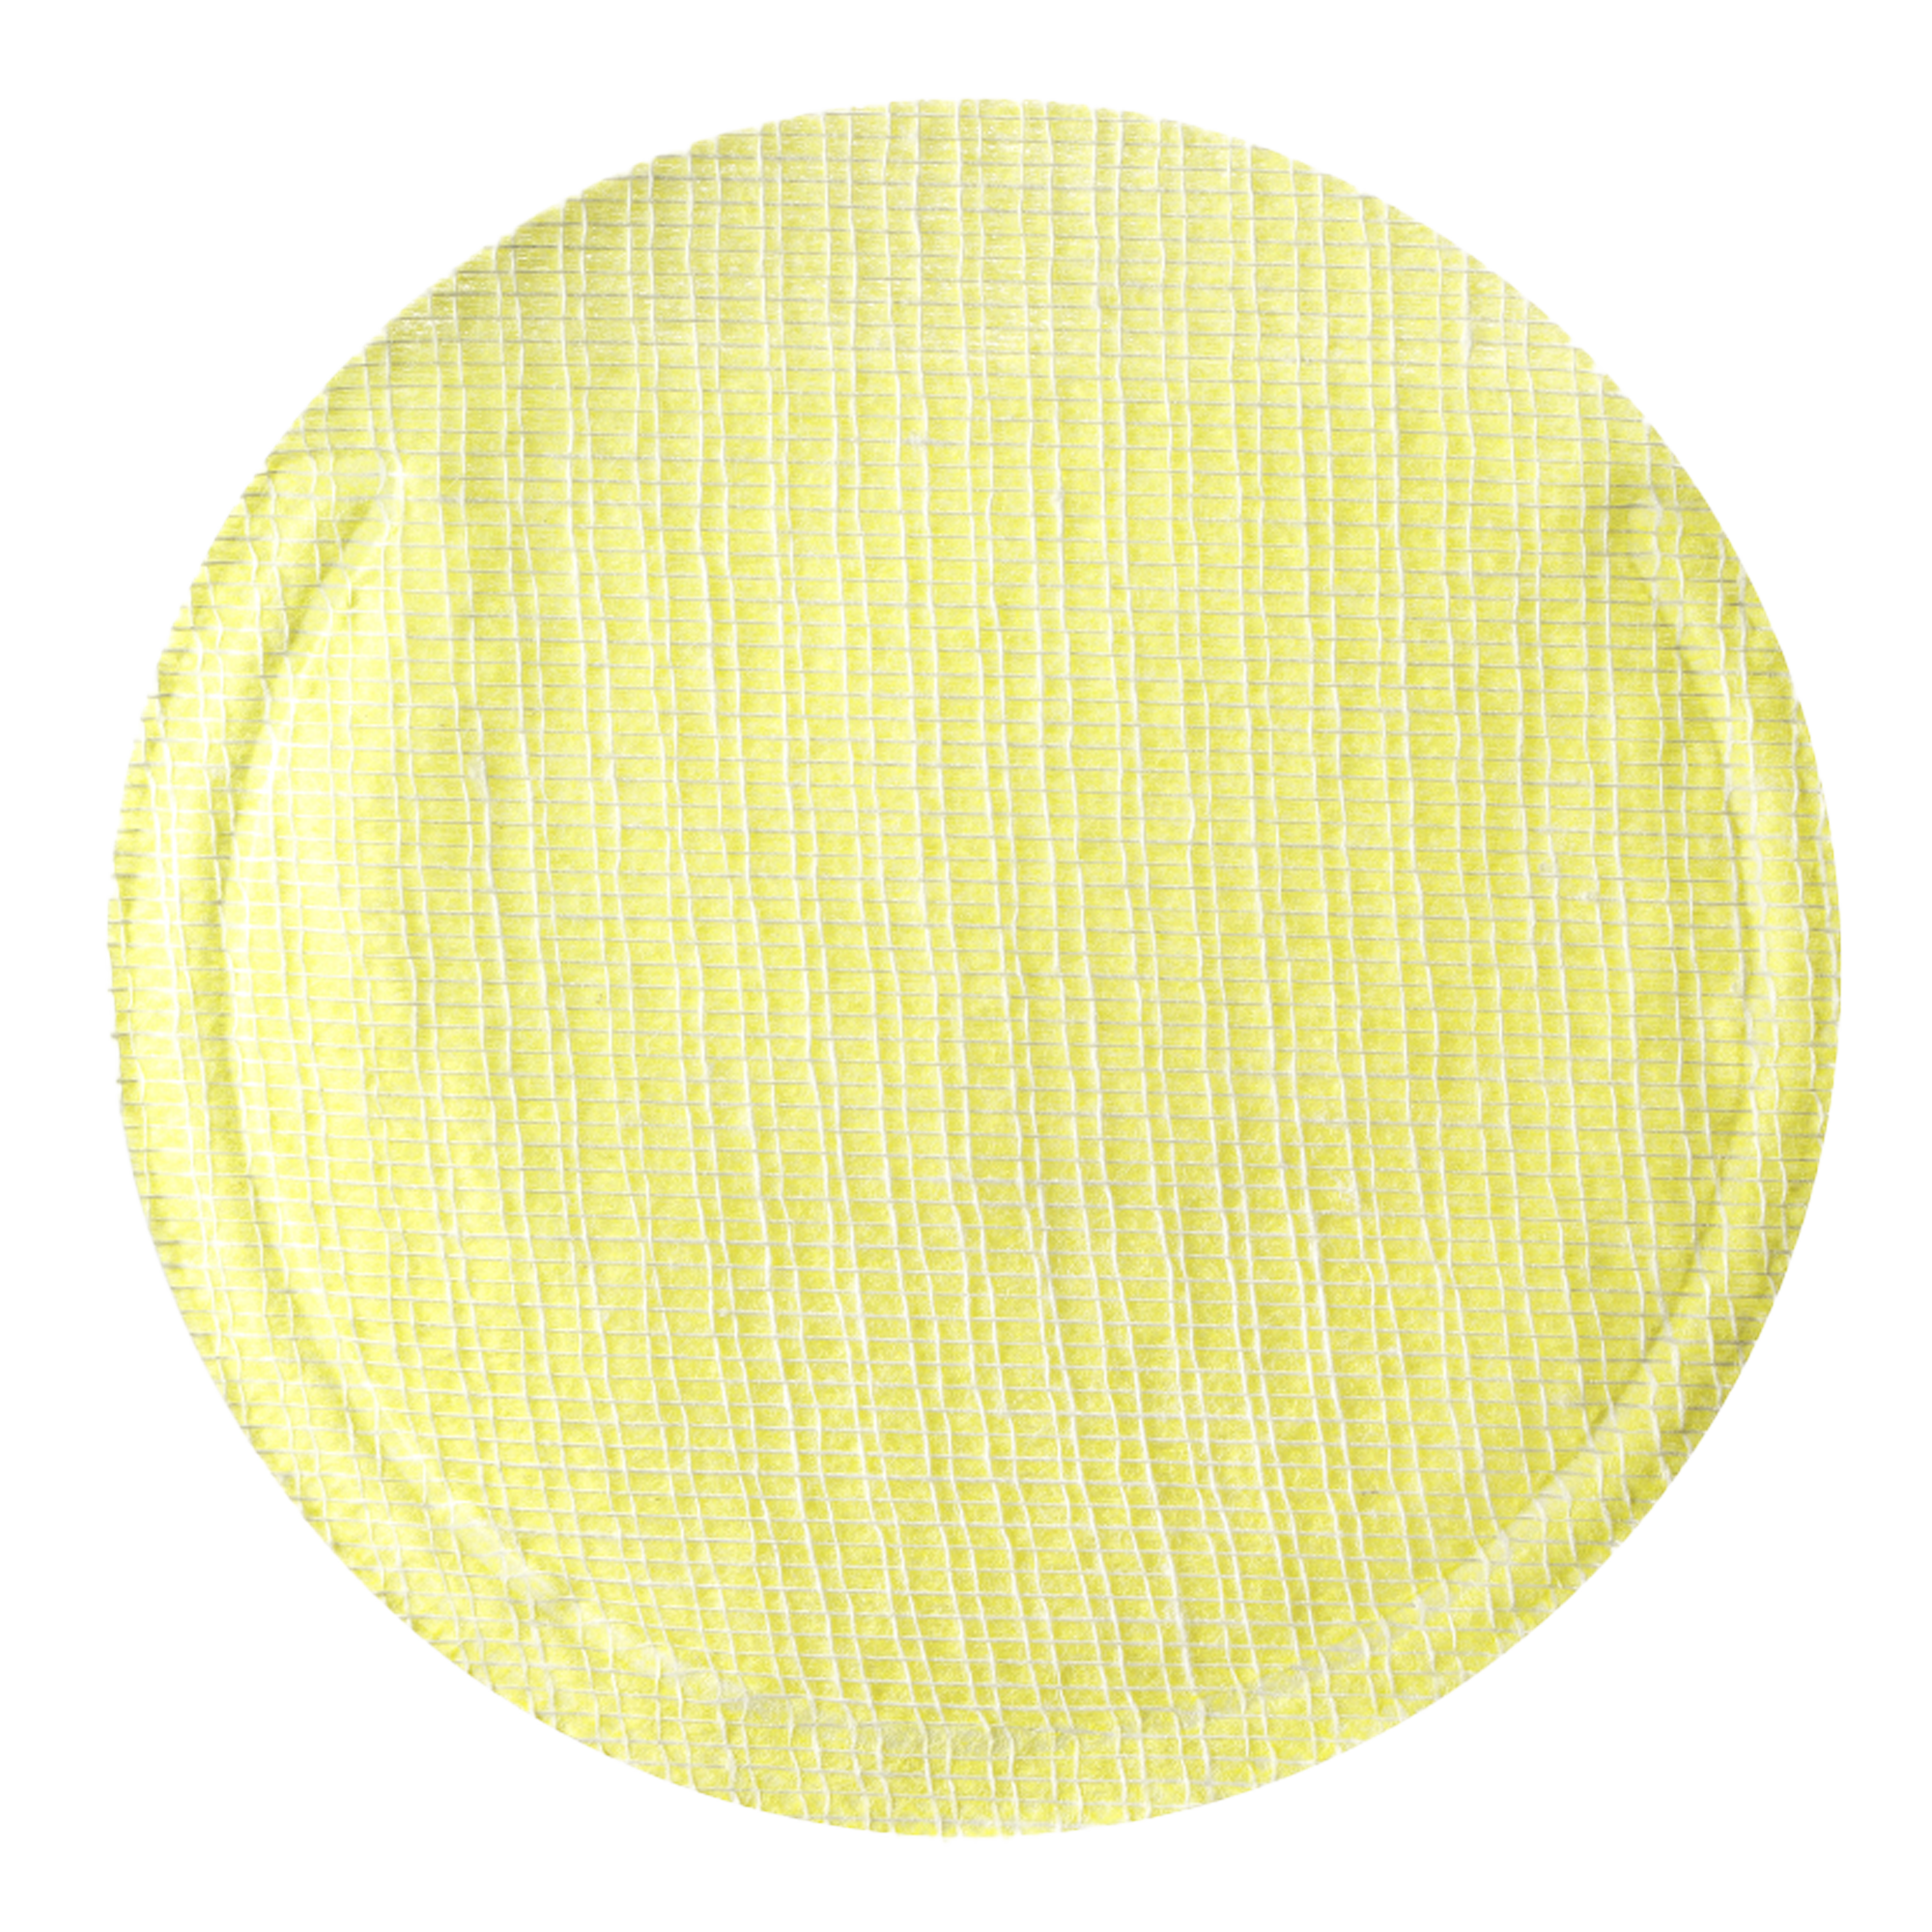 NEOGEN DERMALOGY Lemon Bright Pha Gauze Peeling 190ml (30 Pads)